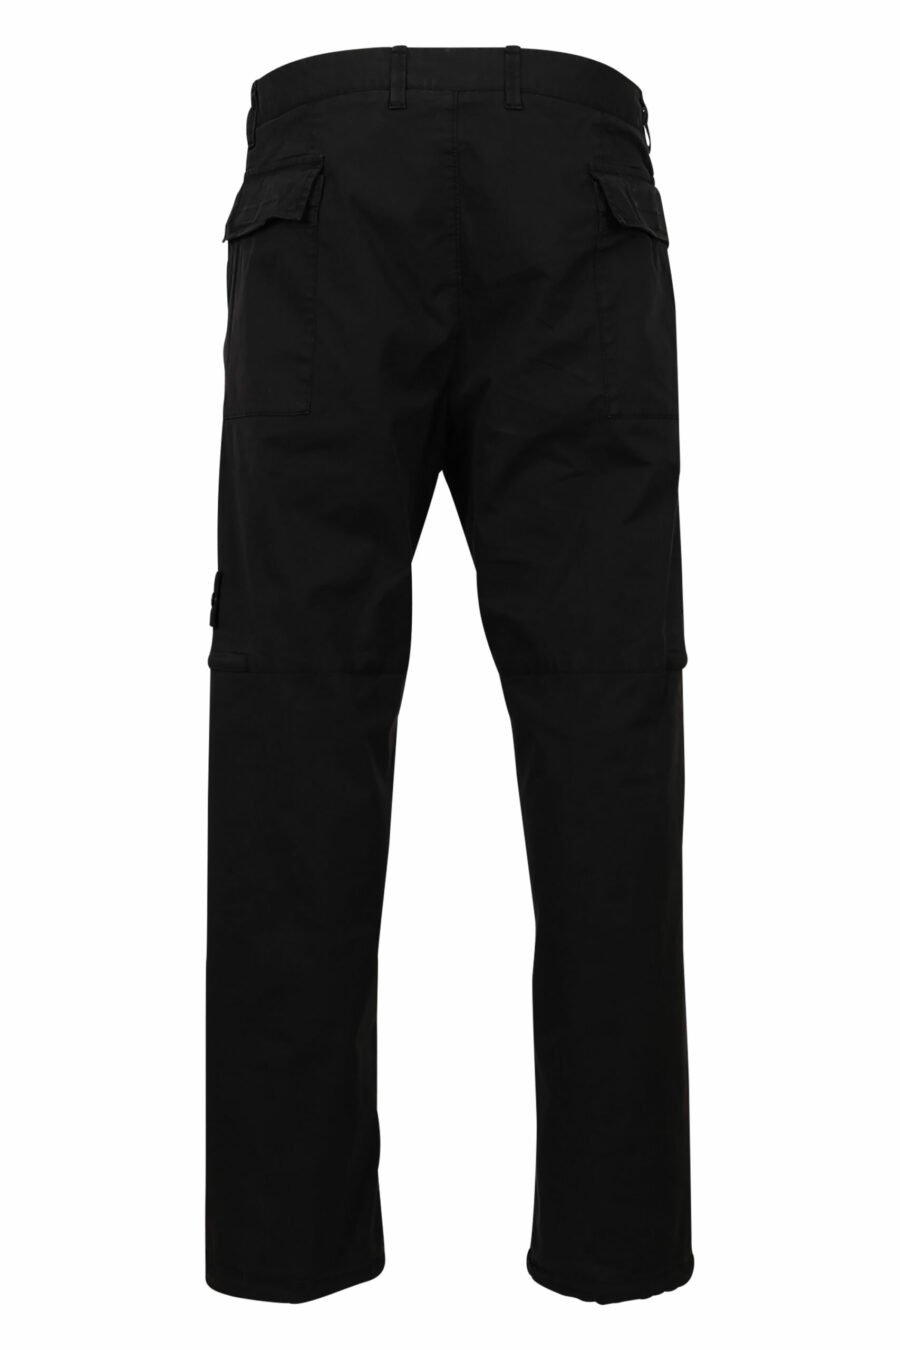 Pantalón cargo negro con bolsillos y logo parche - 8052572731846 2 scaled